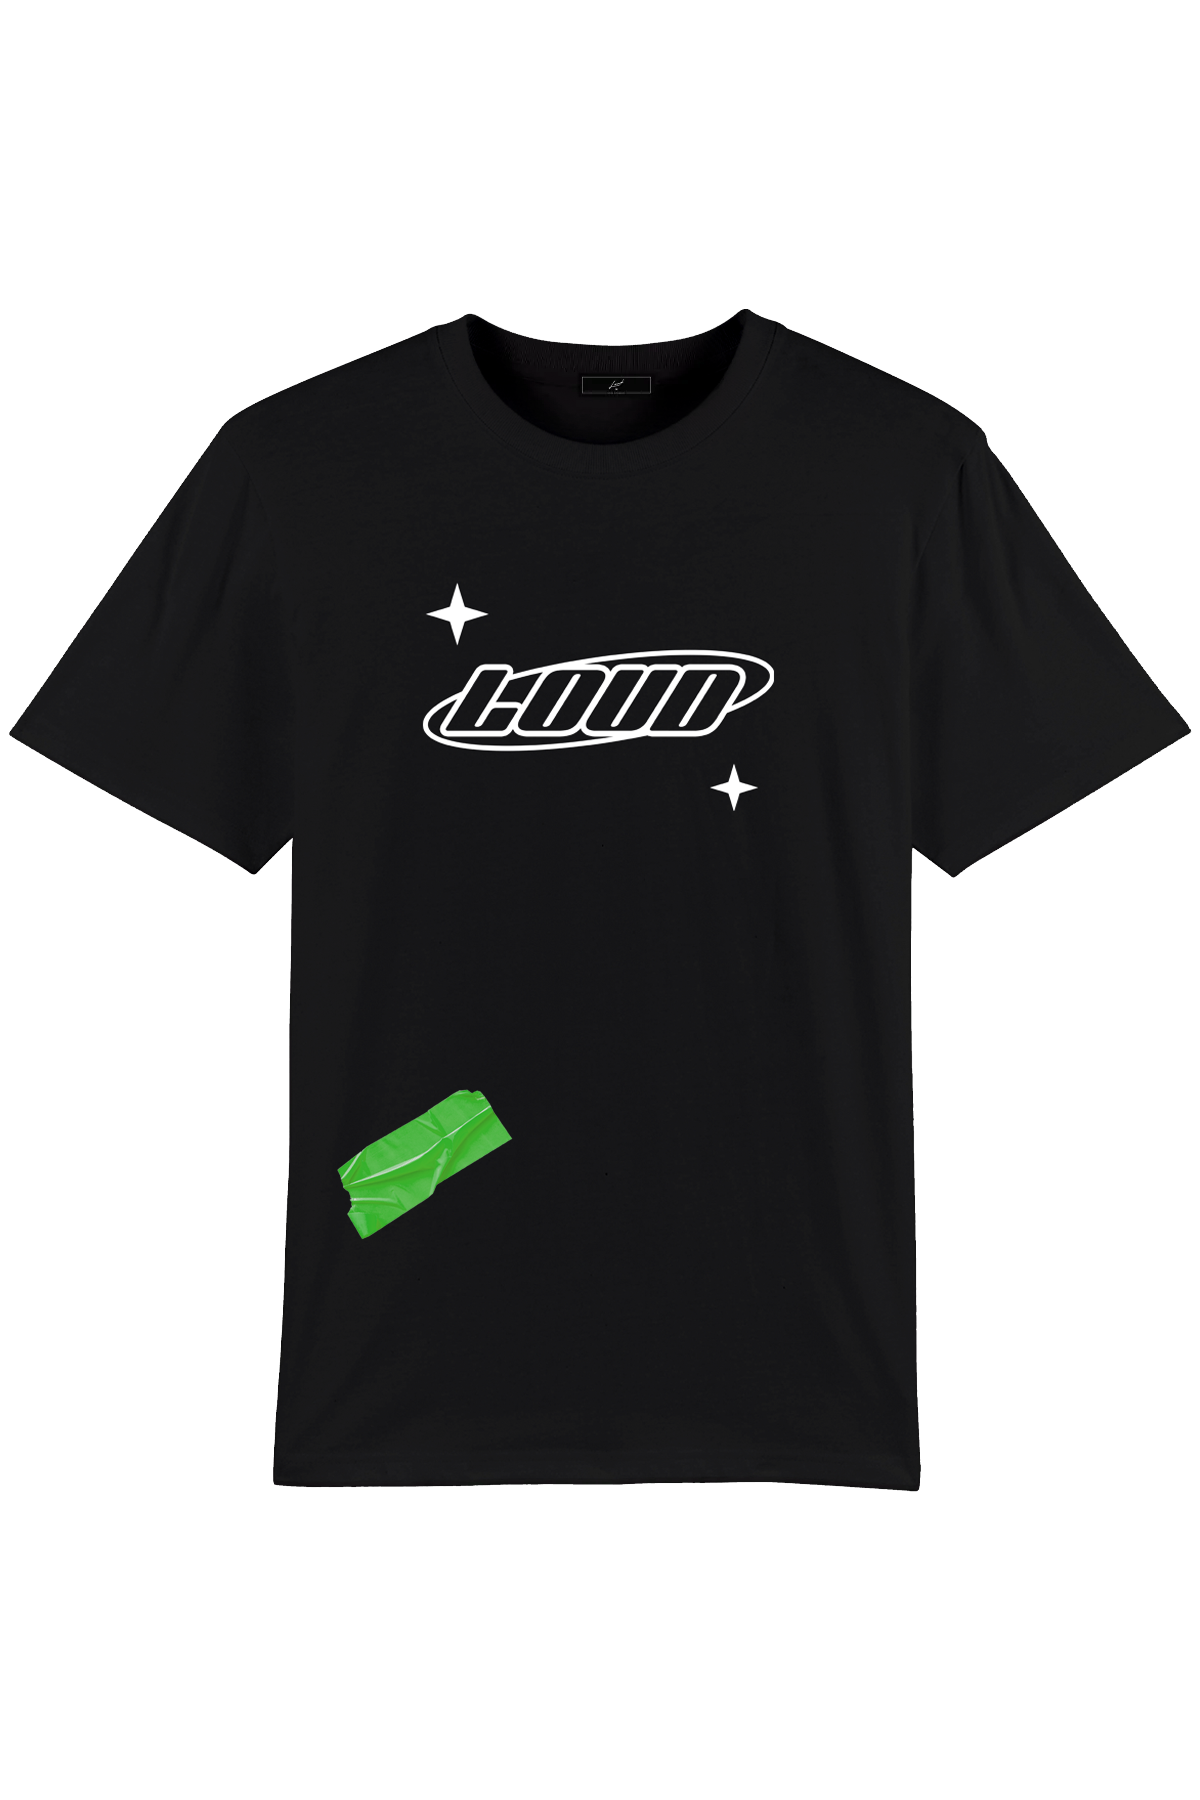 Loud Logo Green Tape - Black T-Shirt